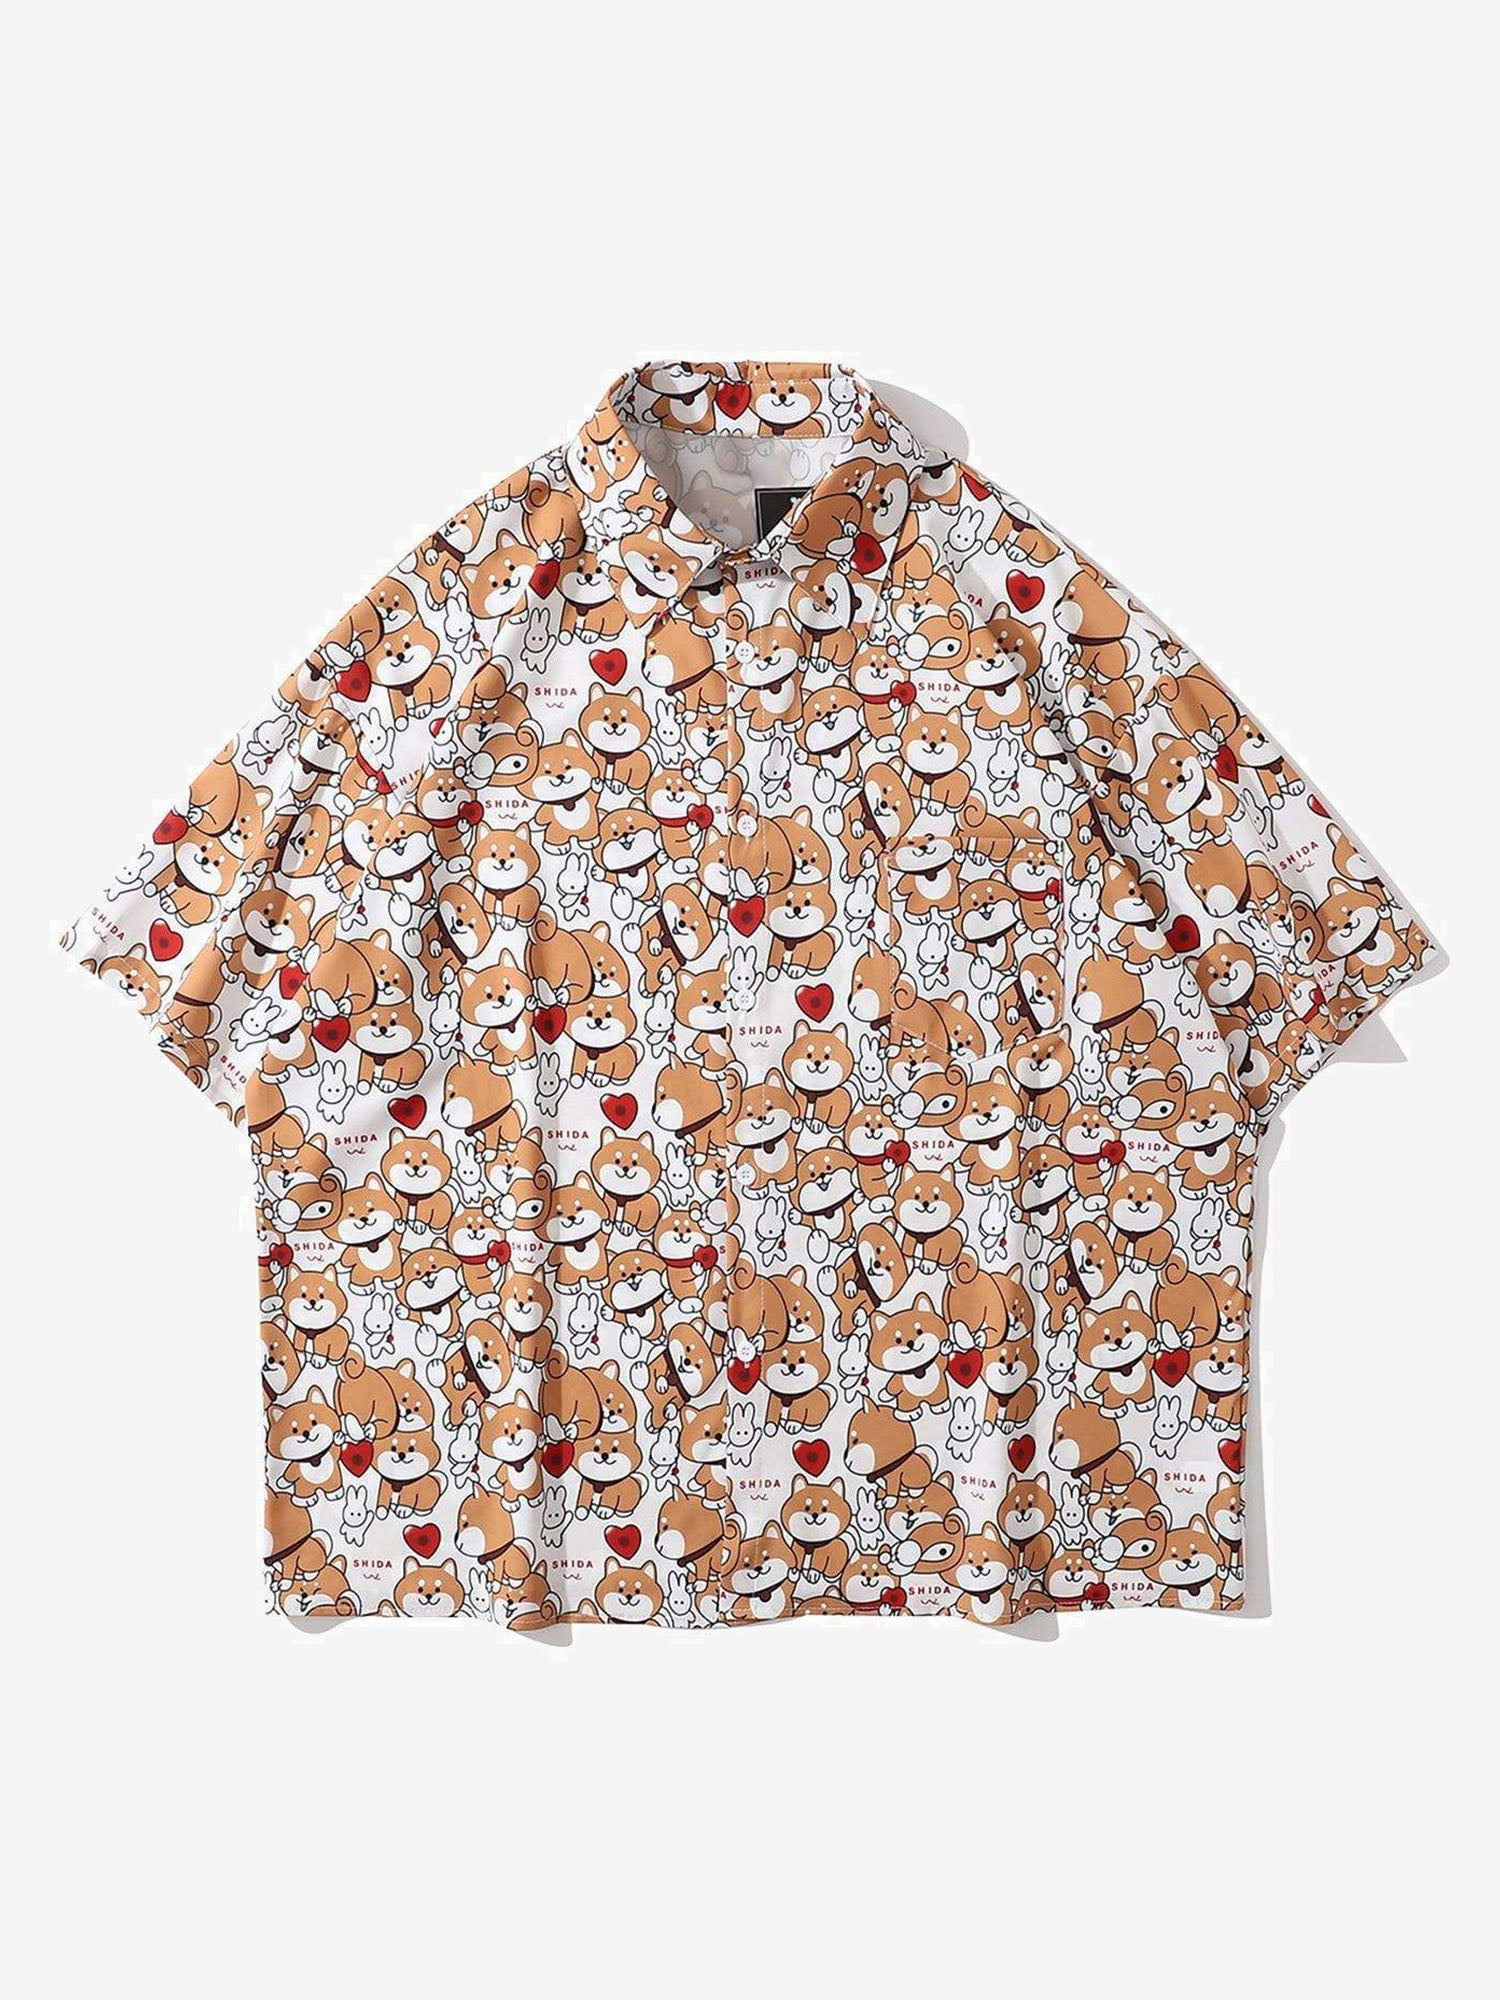 JUSTNOTAG Cartoon Dog Full Print Resort style Short Sleeved Shirt